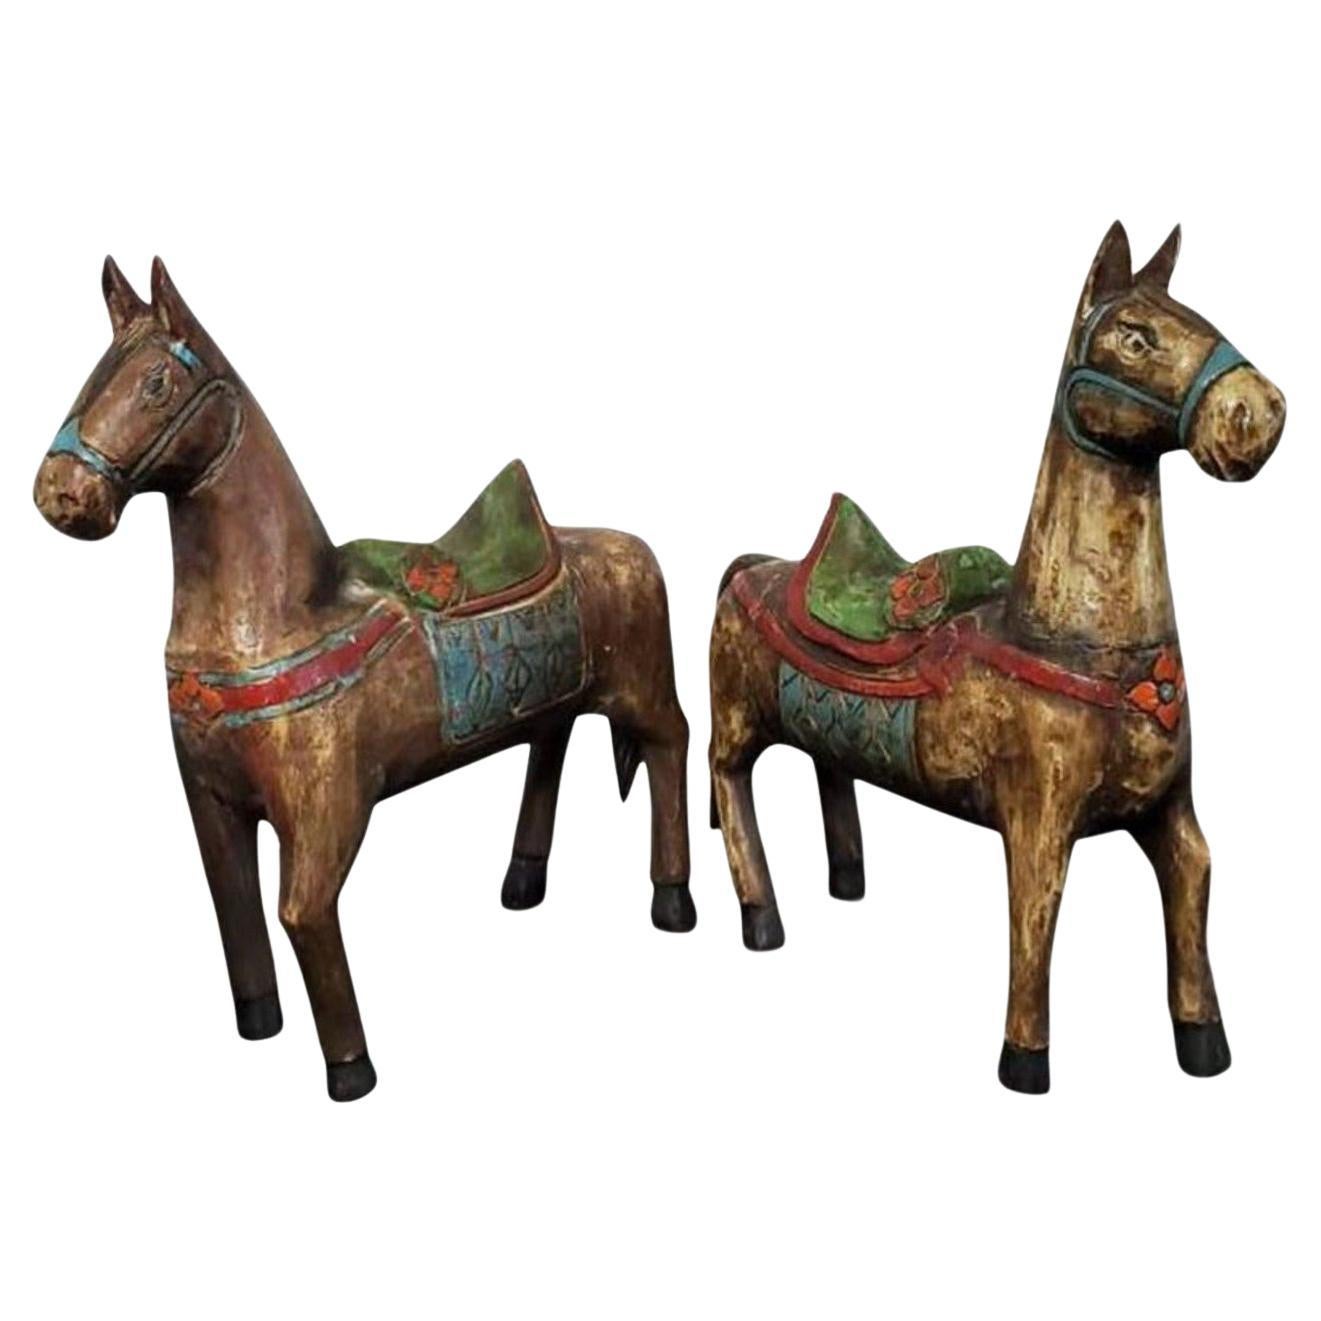 Pair of Antique Hand Carved Folk Art Horse Sculptures